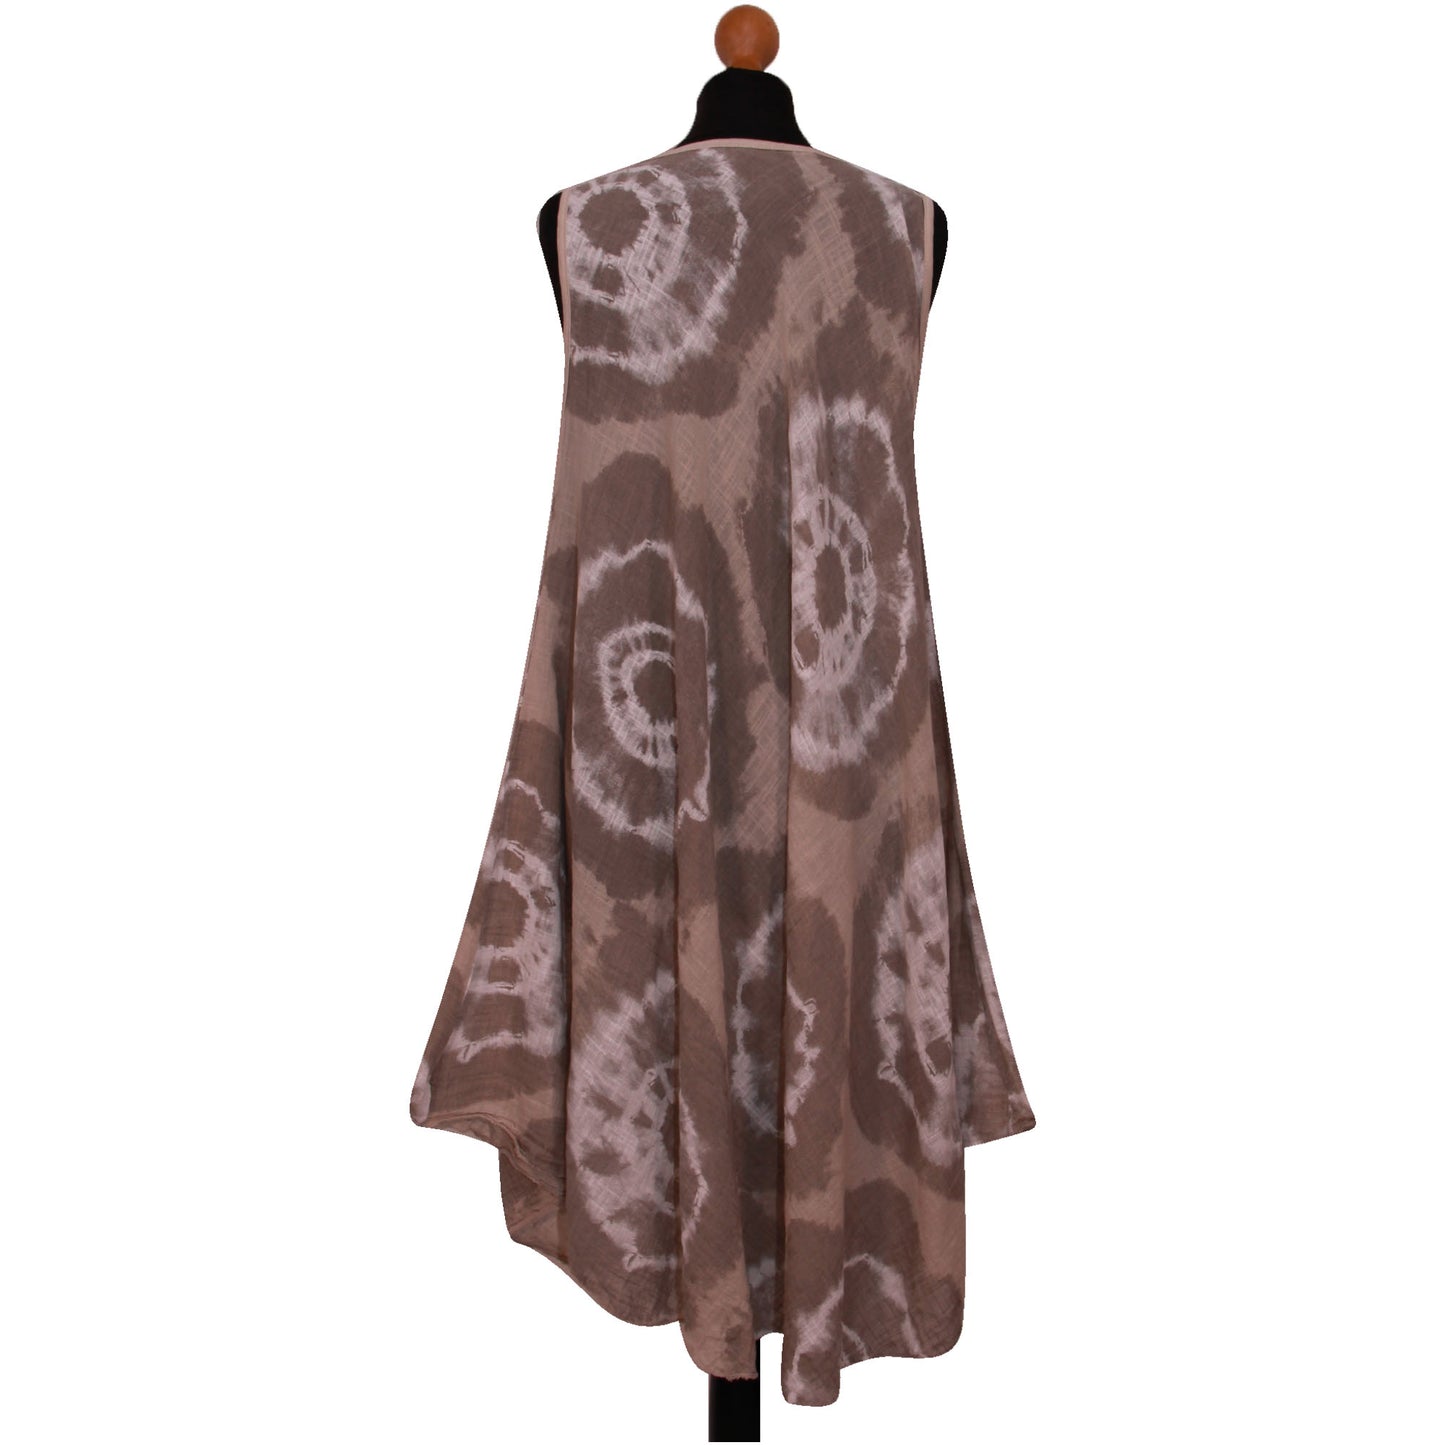 Printed Tie Dye Skater Dress for Women: Sleeveless Fashion